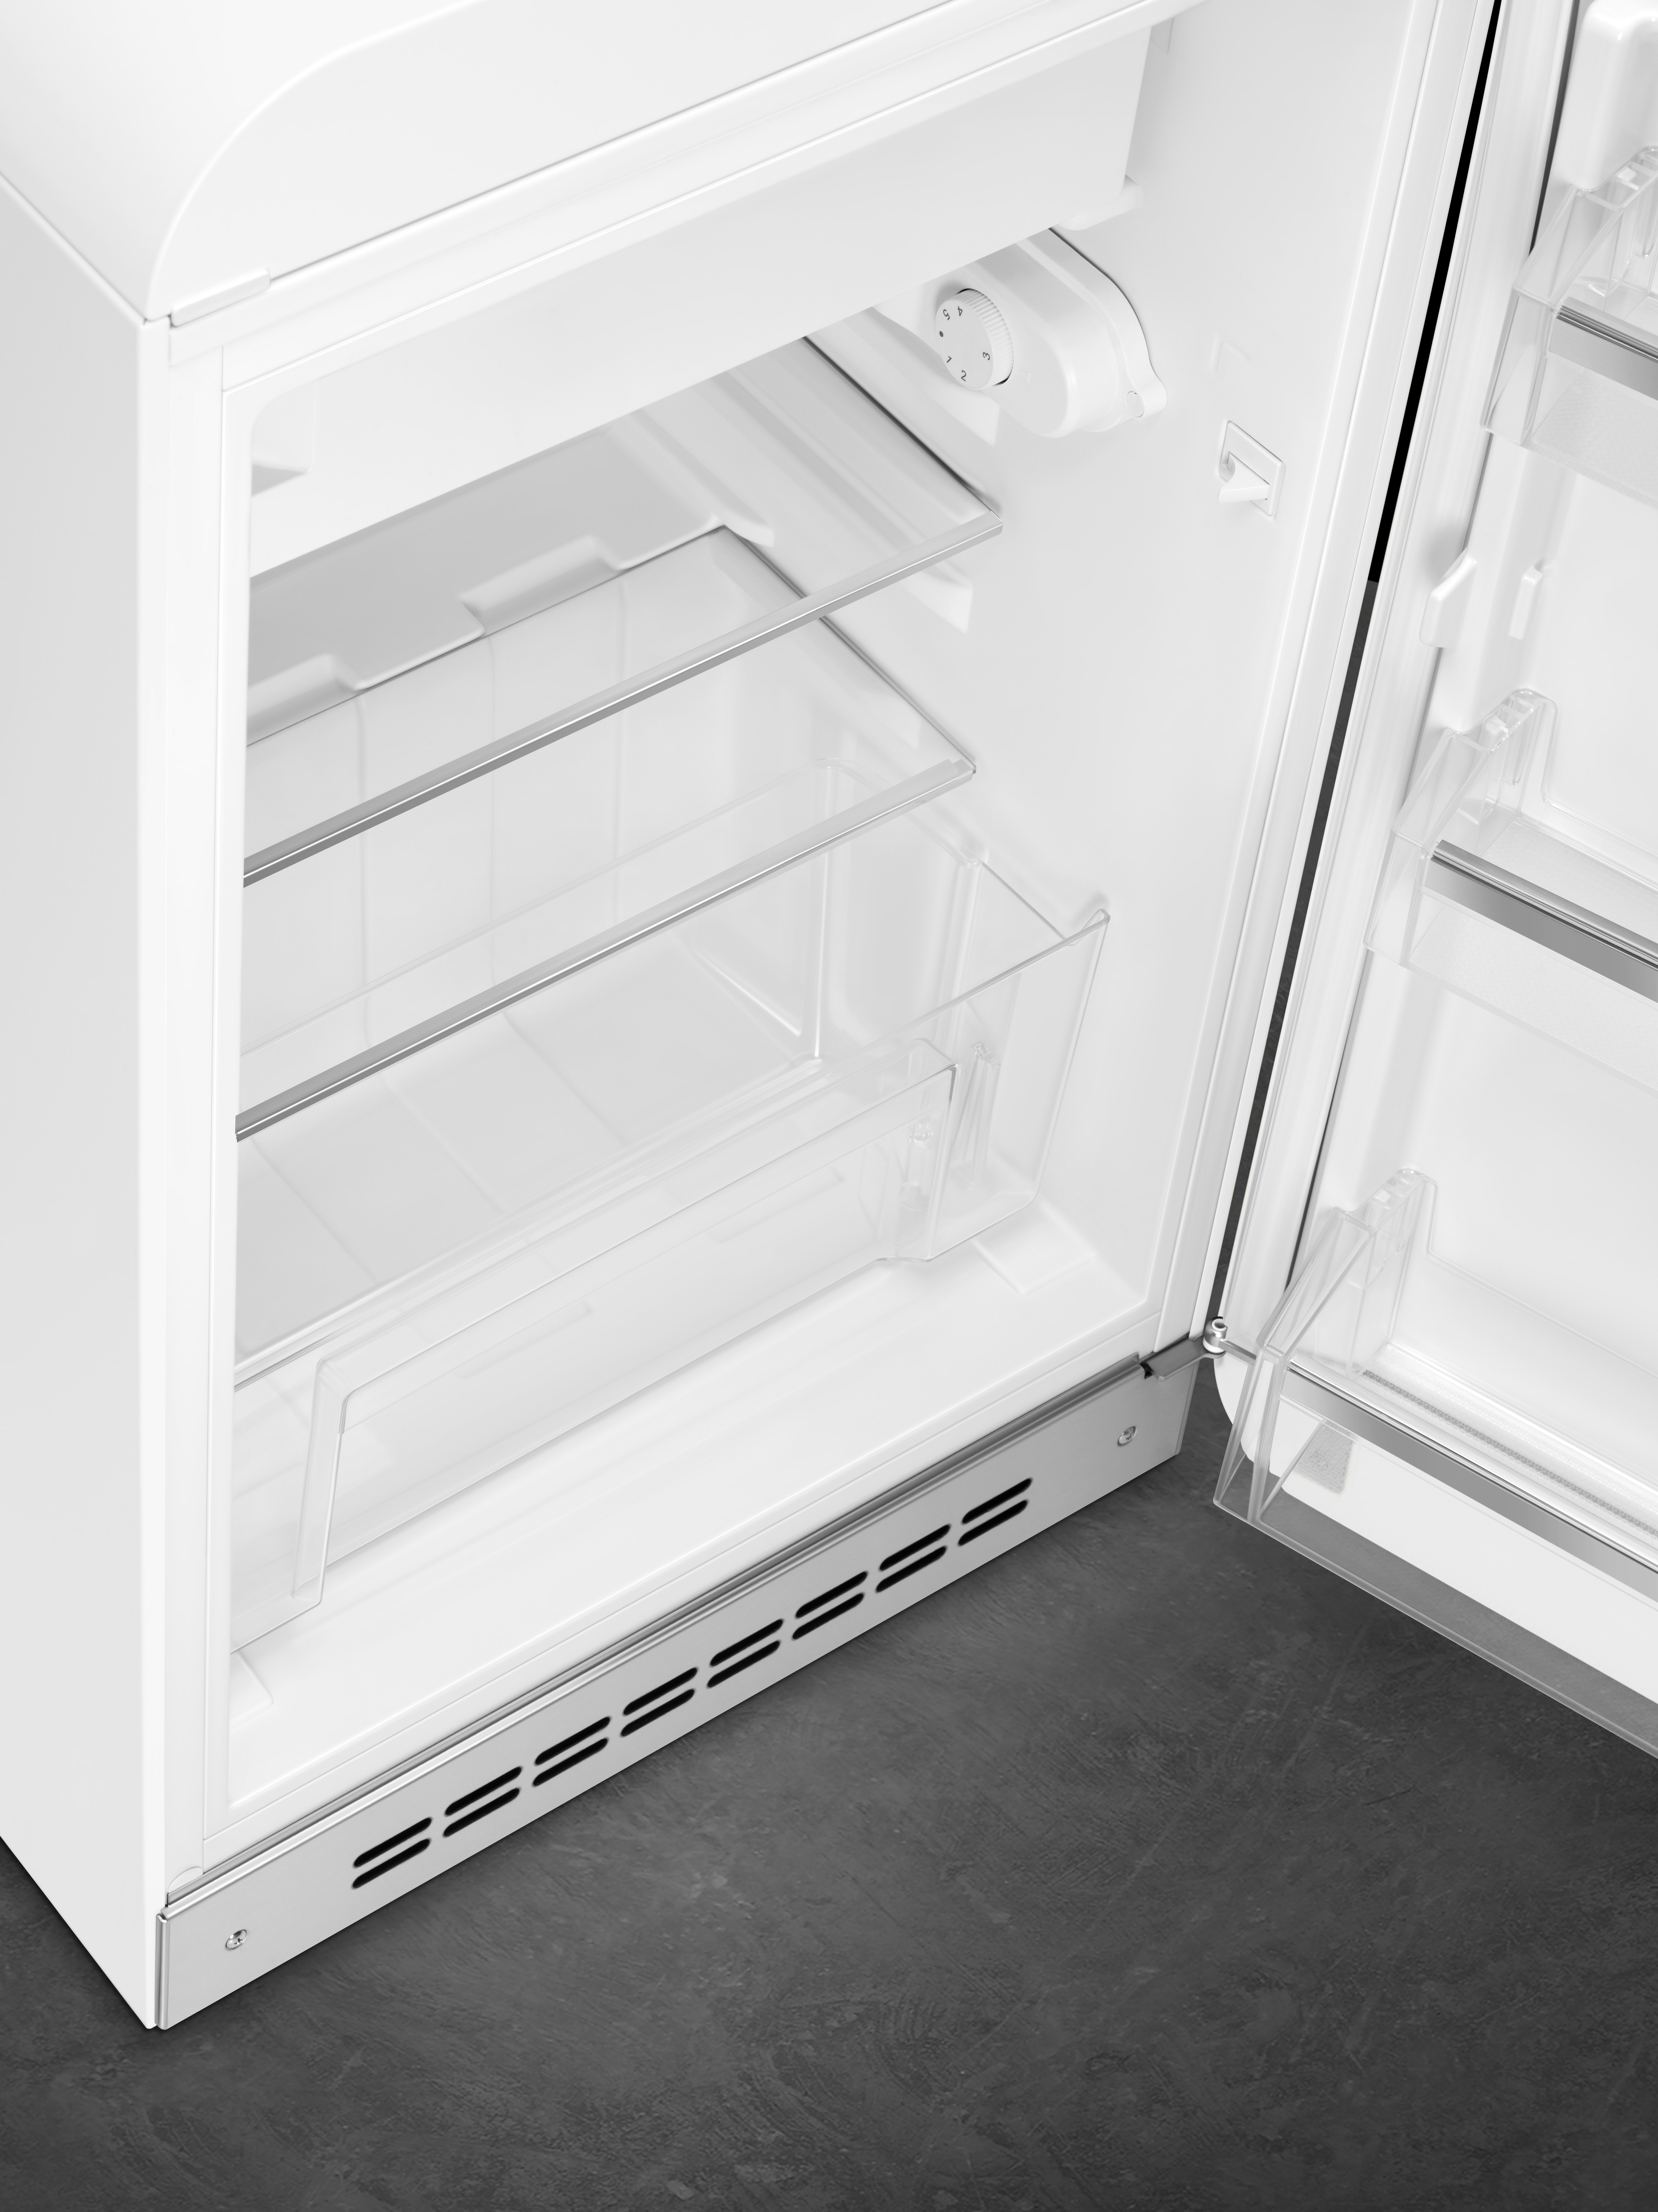 50's Style, Stand-Kühlschrank, 1-türig, 54 cm, Rechtsanschlag, Weiß